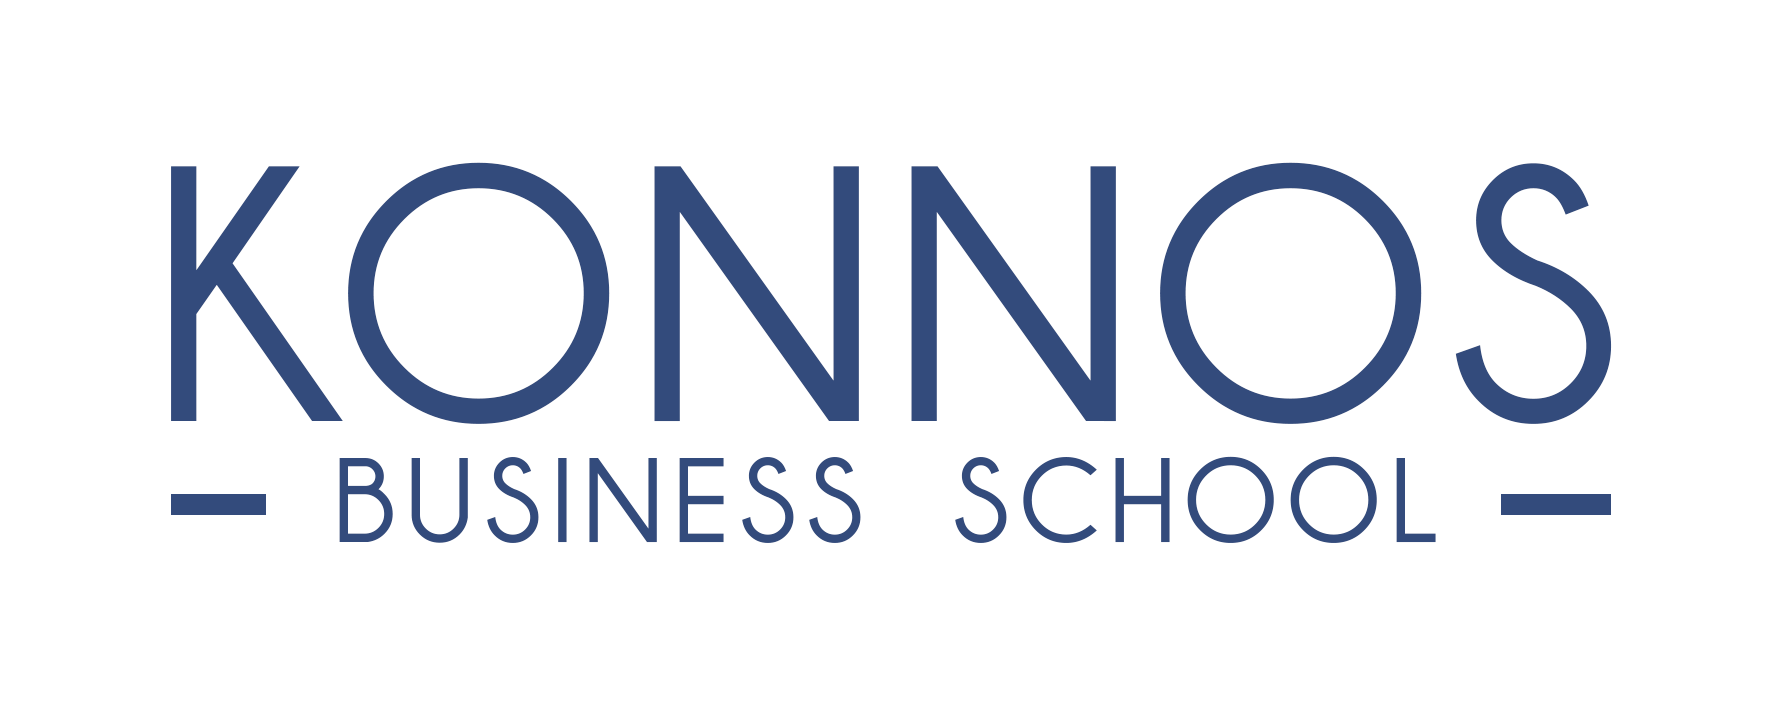 KONNOS BUSINESS SCHOOL